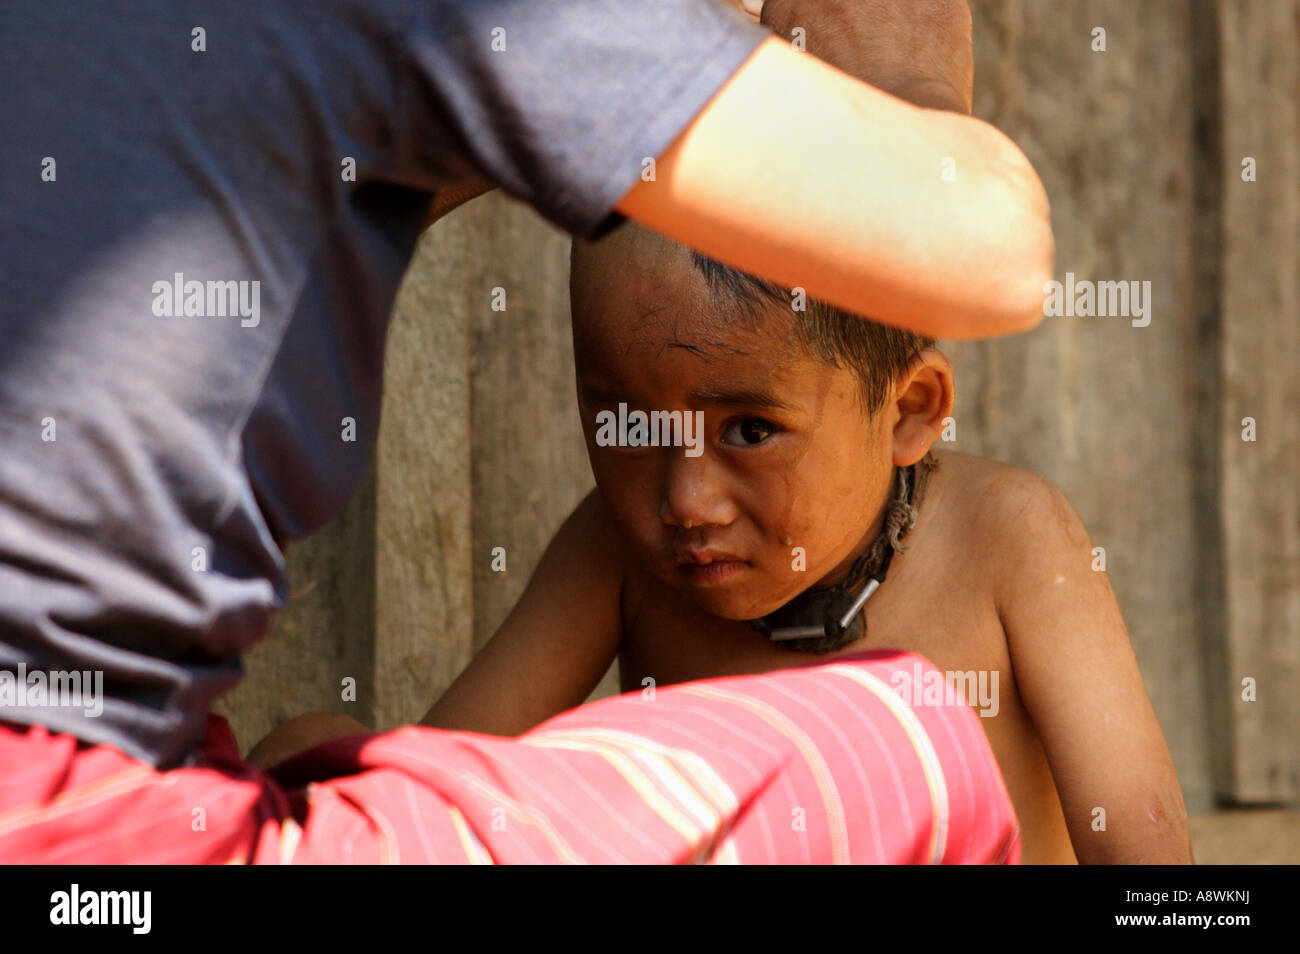 Asia, Myanmar, child having head shaved Stock Photo